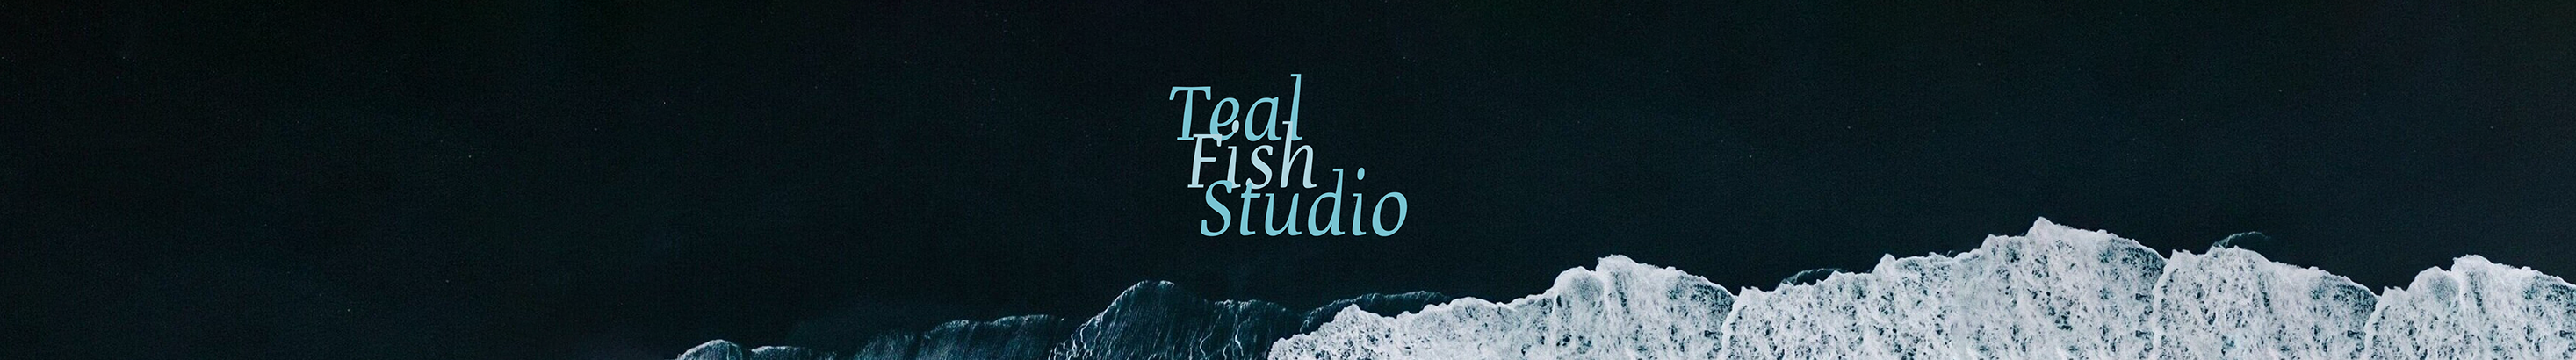 Teal Fish Studio's profile banner